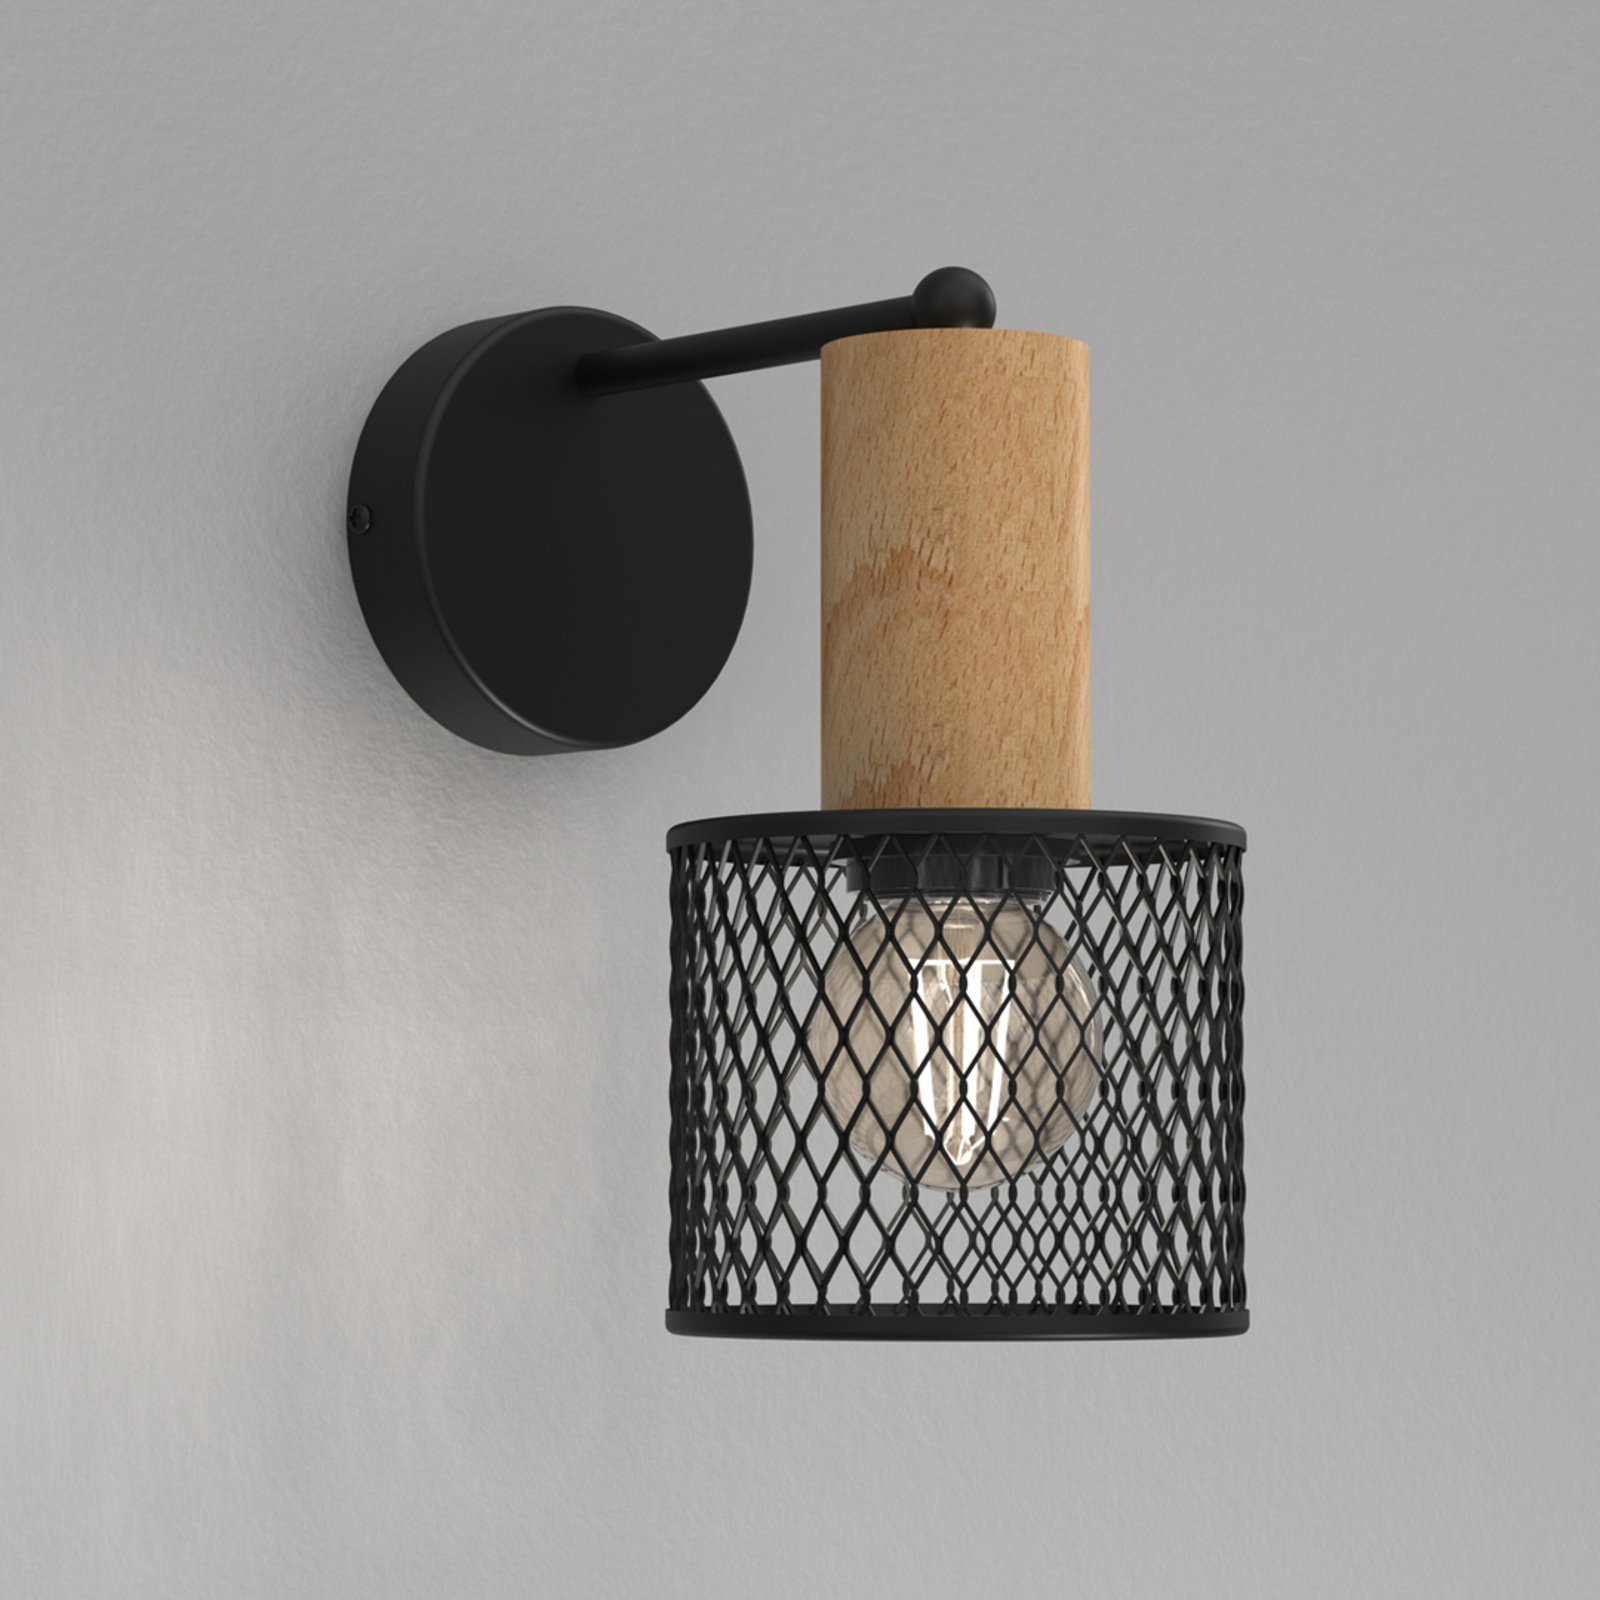 Sobresa wall light with a latticed lampshade